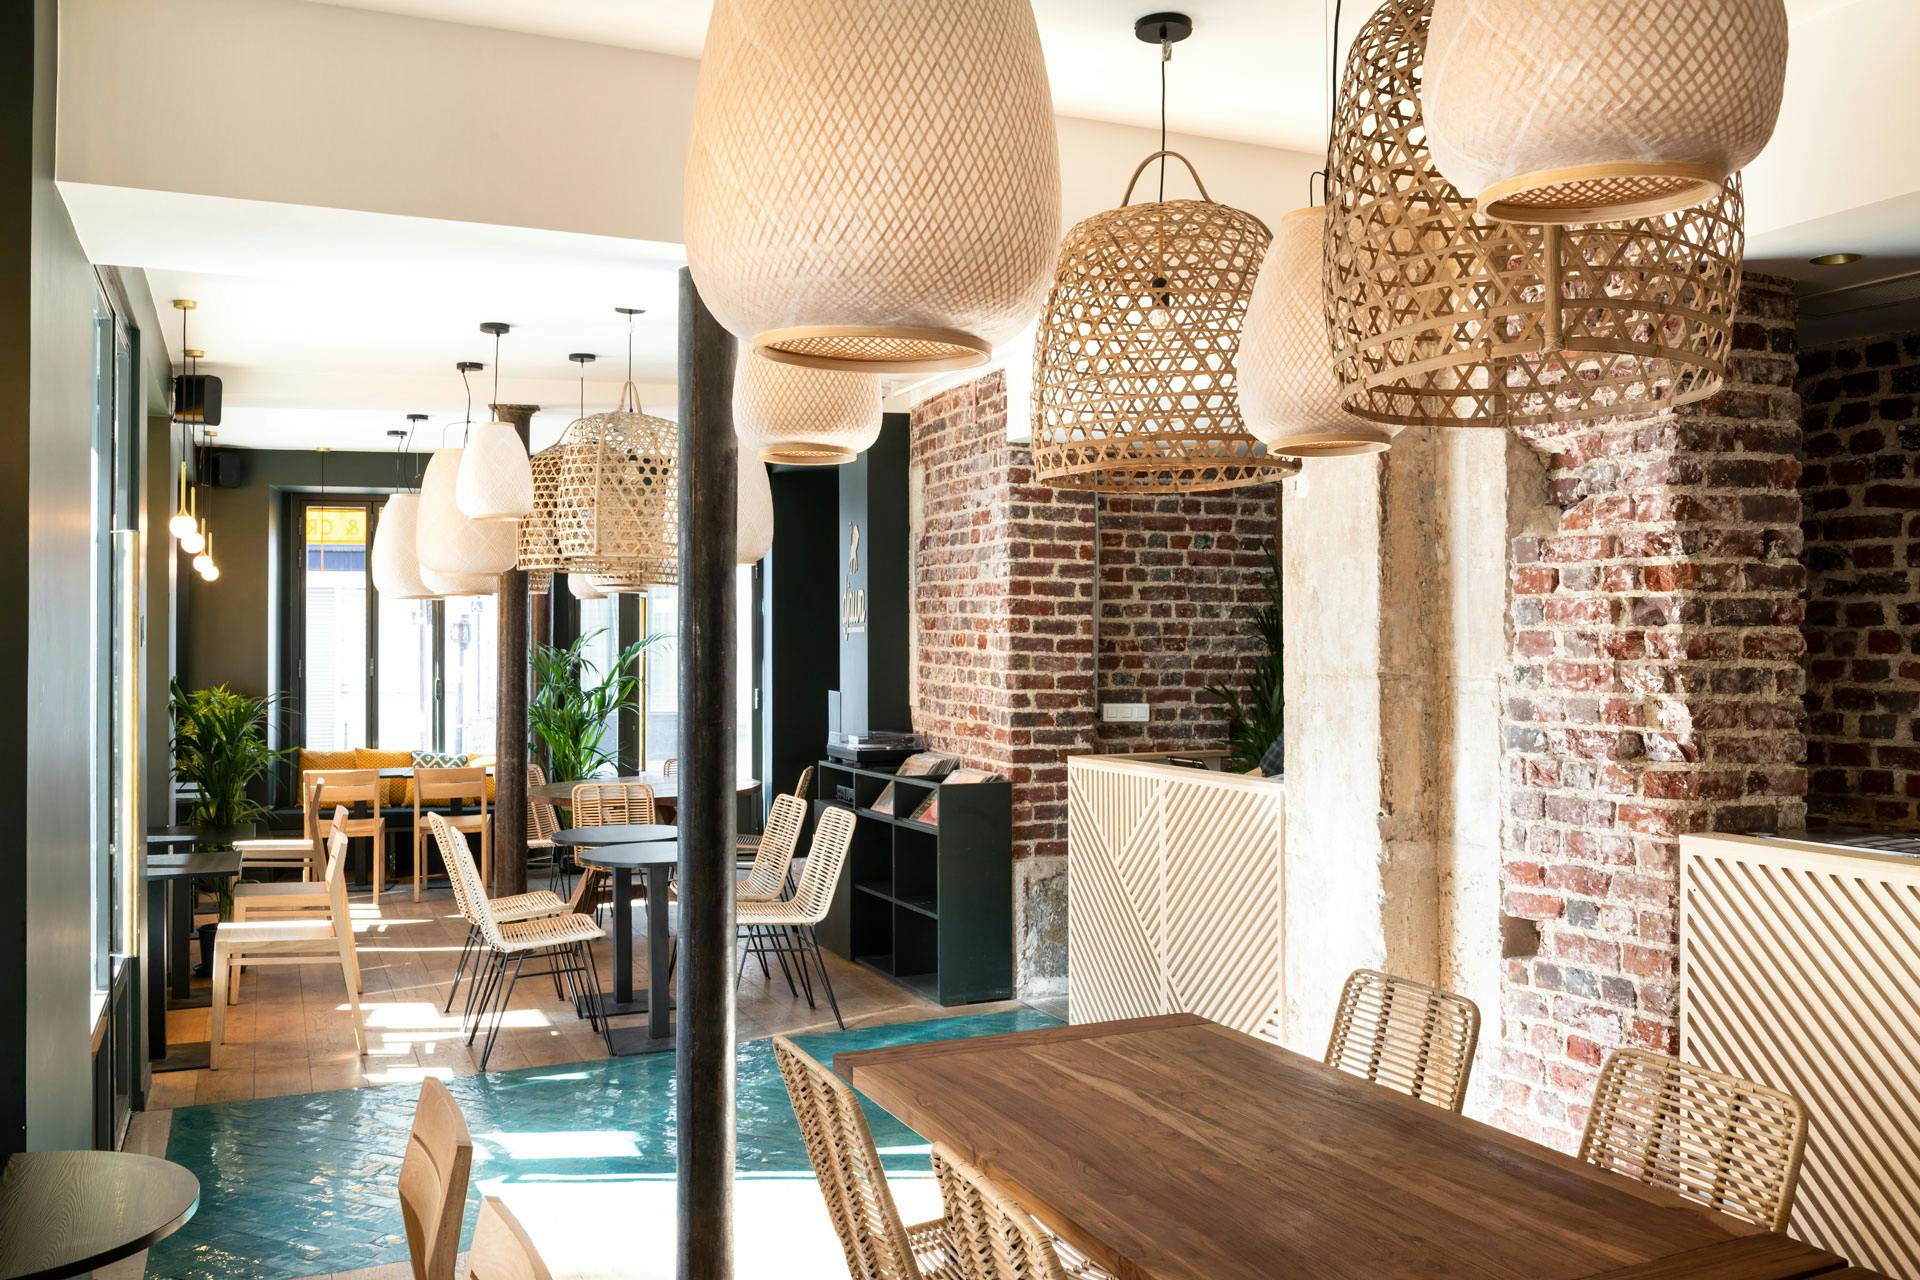 Djawa - restaurant - interior architecture - Paris - wood - brick - indonesian